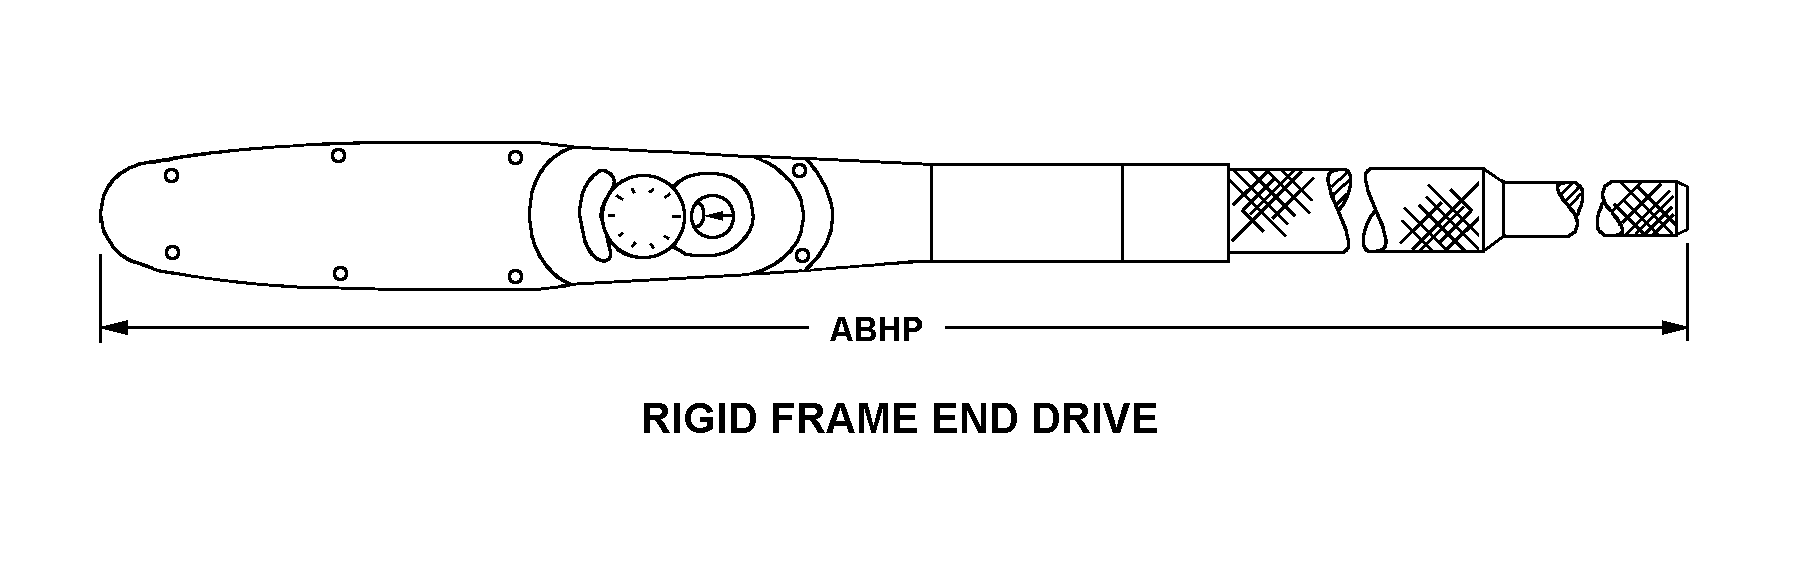 RIGID FRAME END DRIVE style nsn 5120-01-123-6269